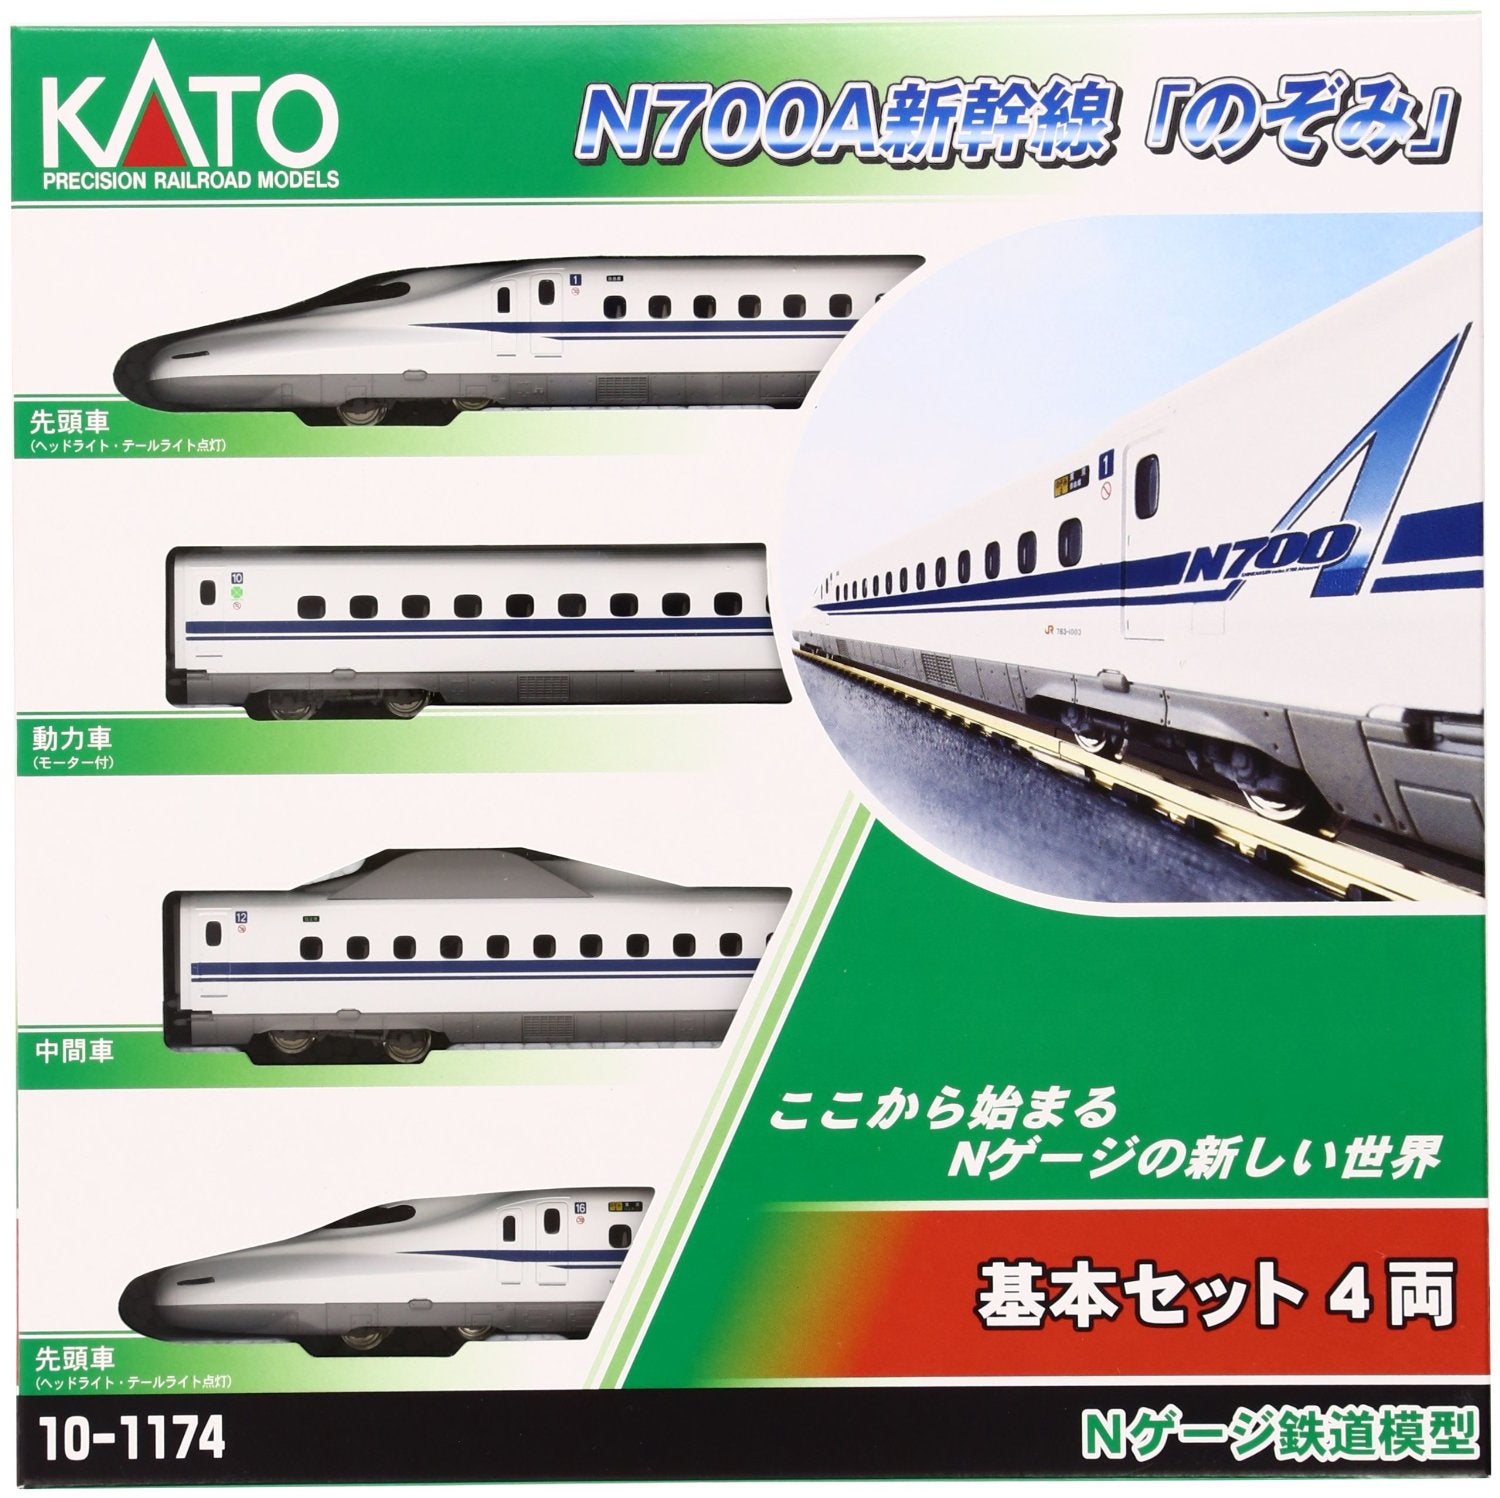 10-1174 Shinkansen Series N700A Nozomi 4 Basic Car Set